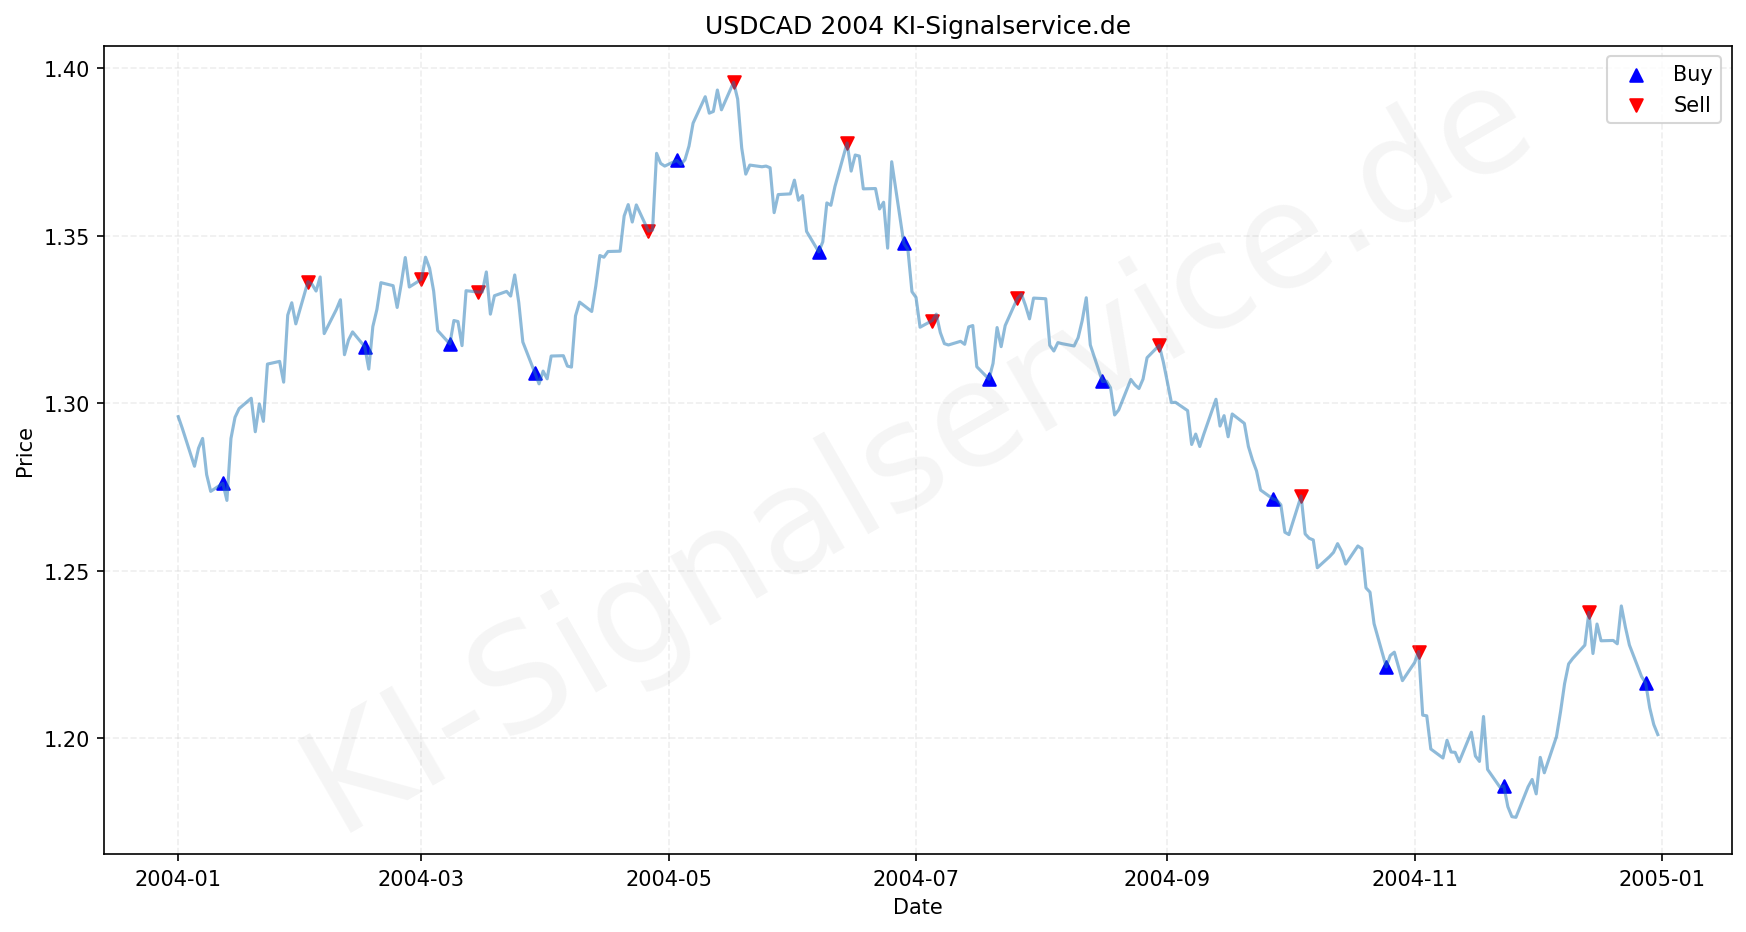 USDCAD Chart - KI Tradingsignale 2004